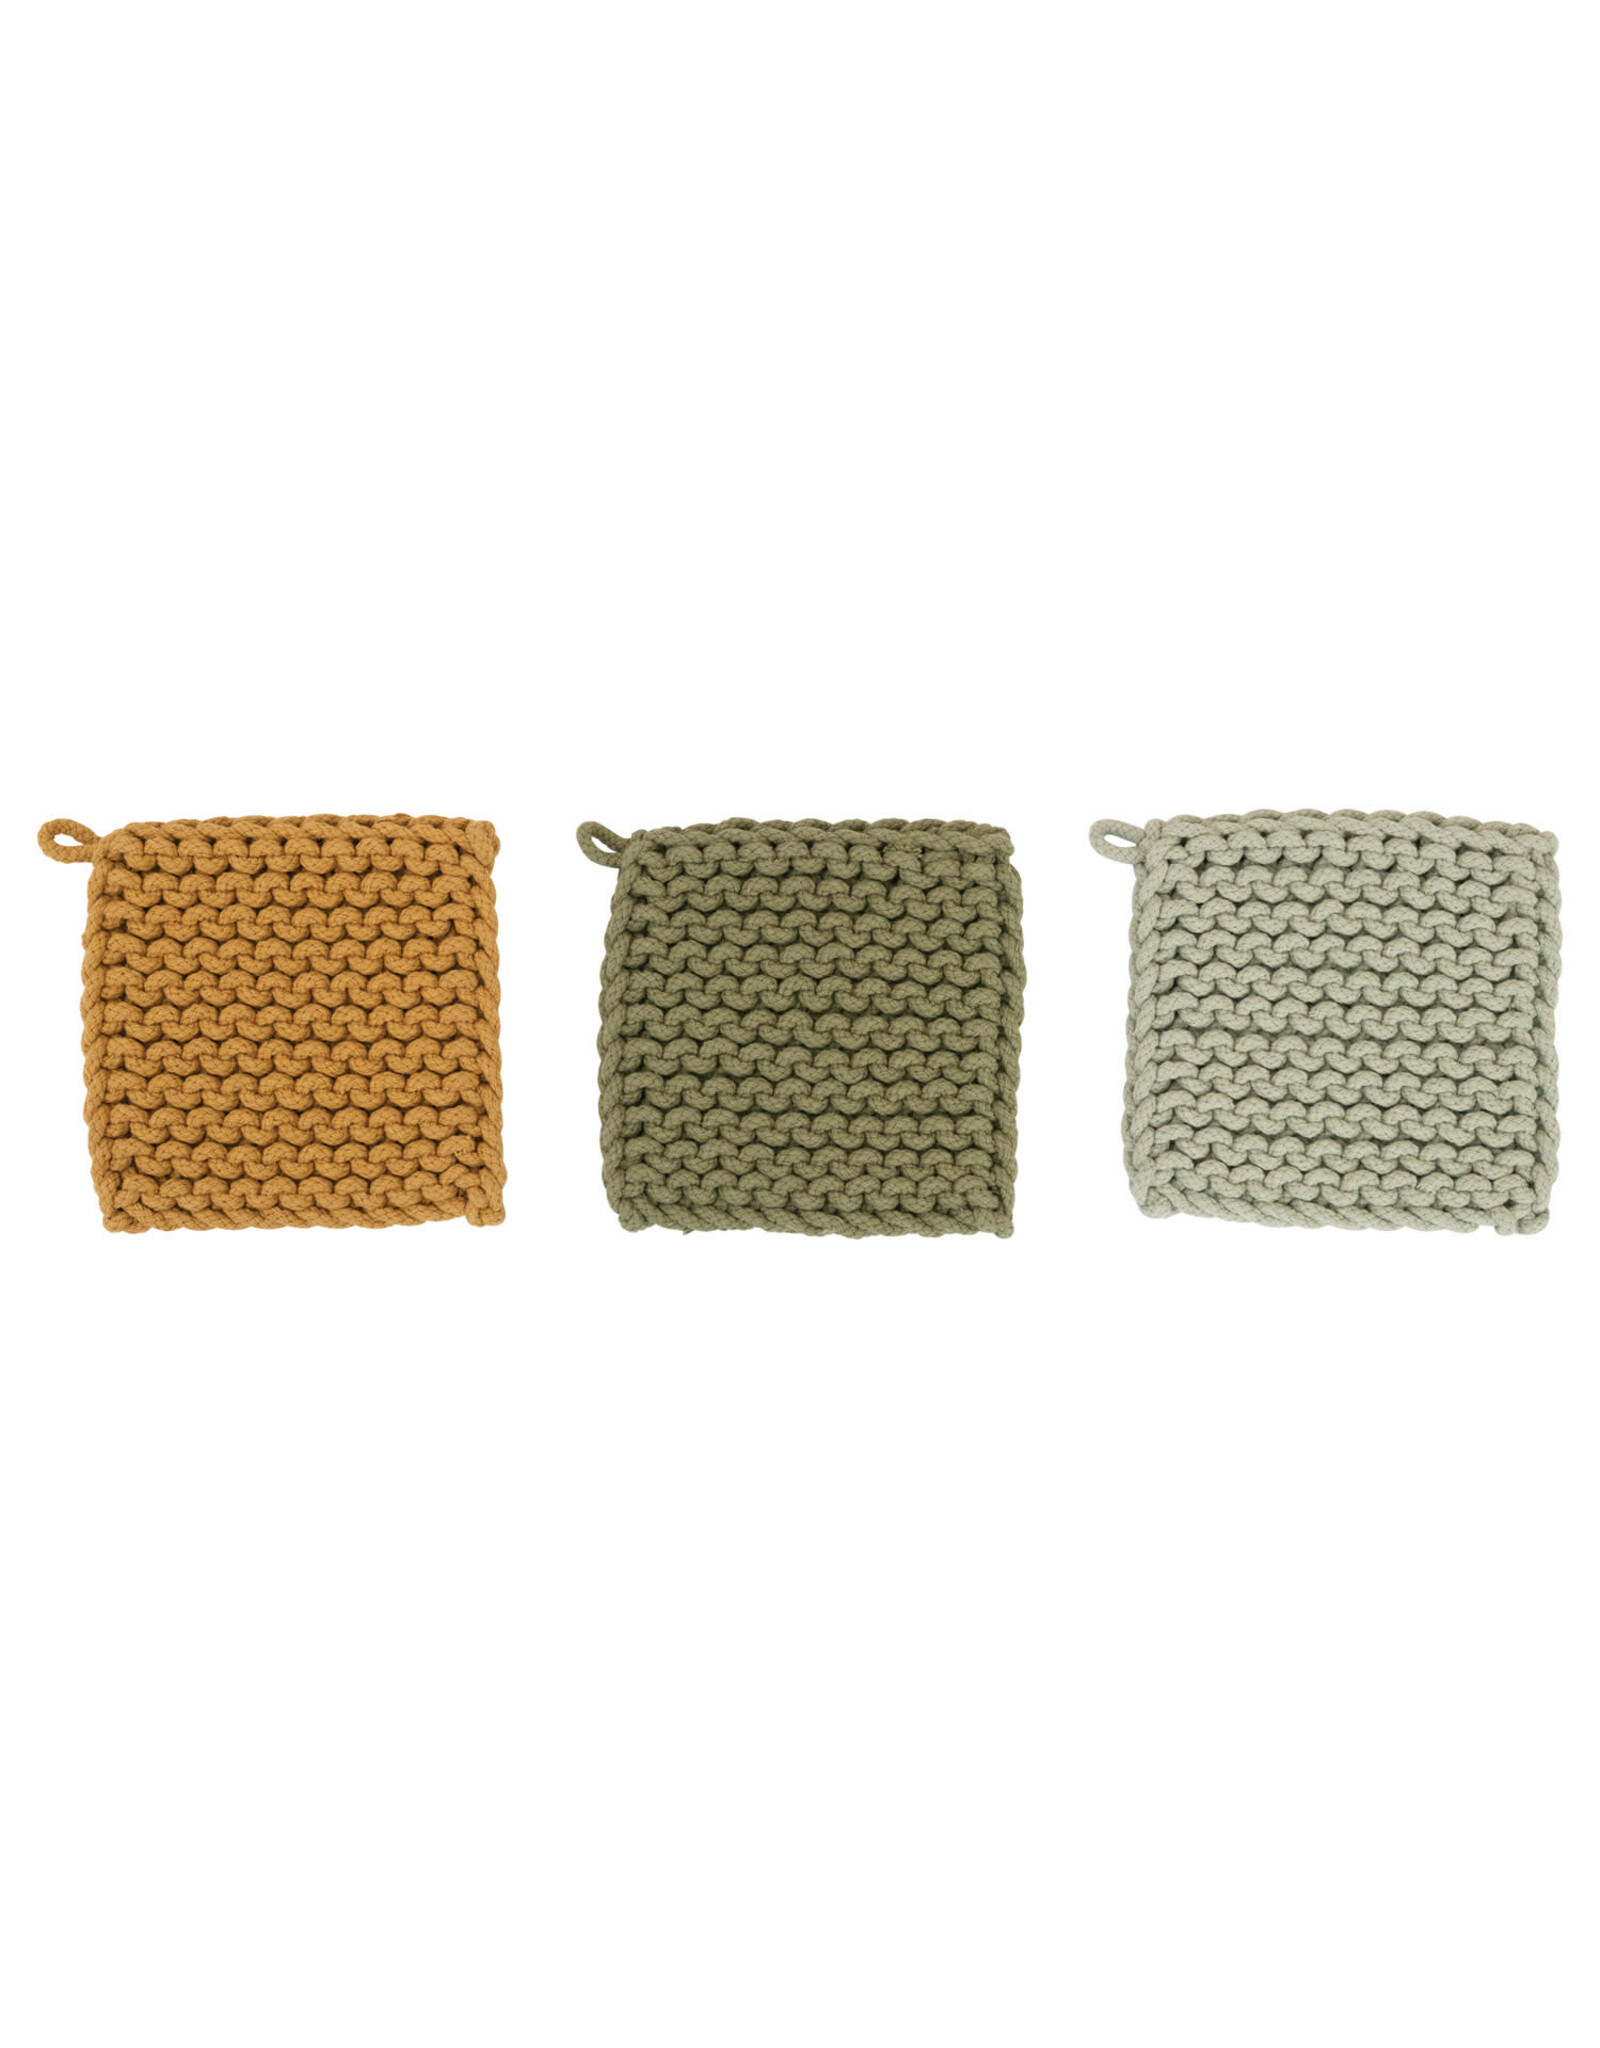 Cotton Crocheted Pot Holder, 3 Colors each DF5468A